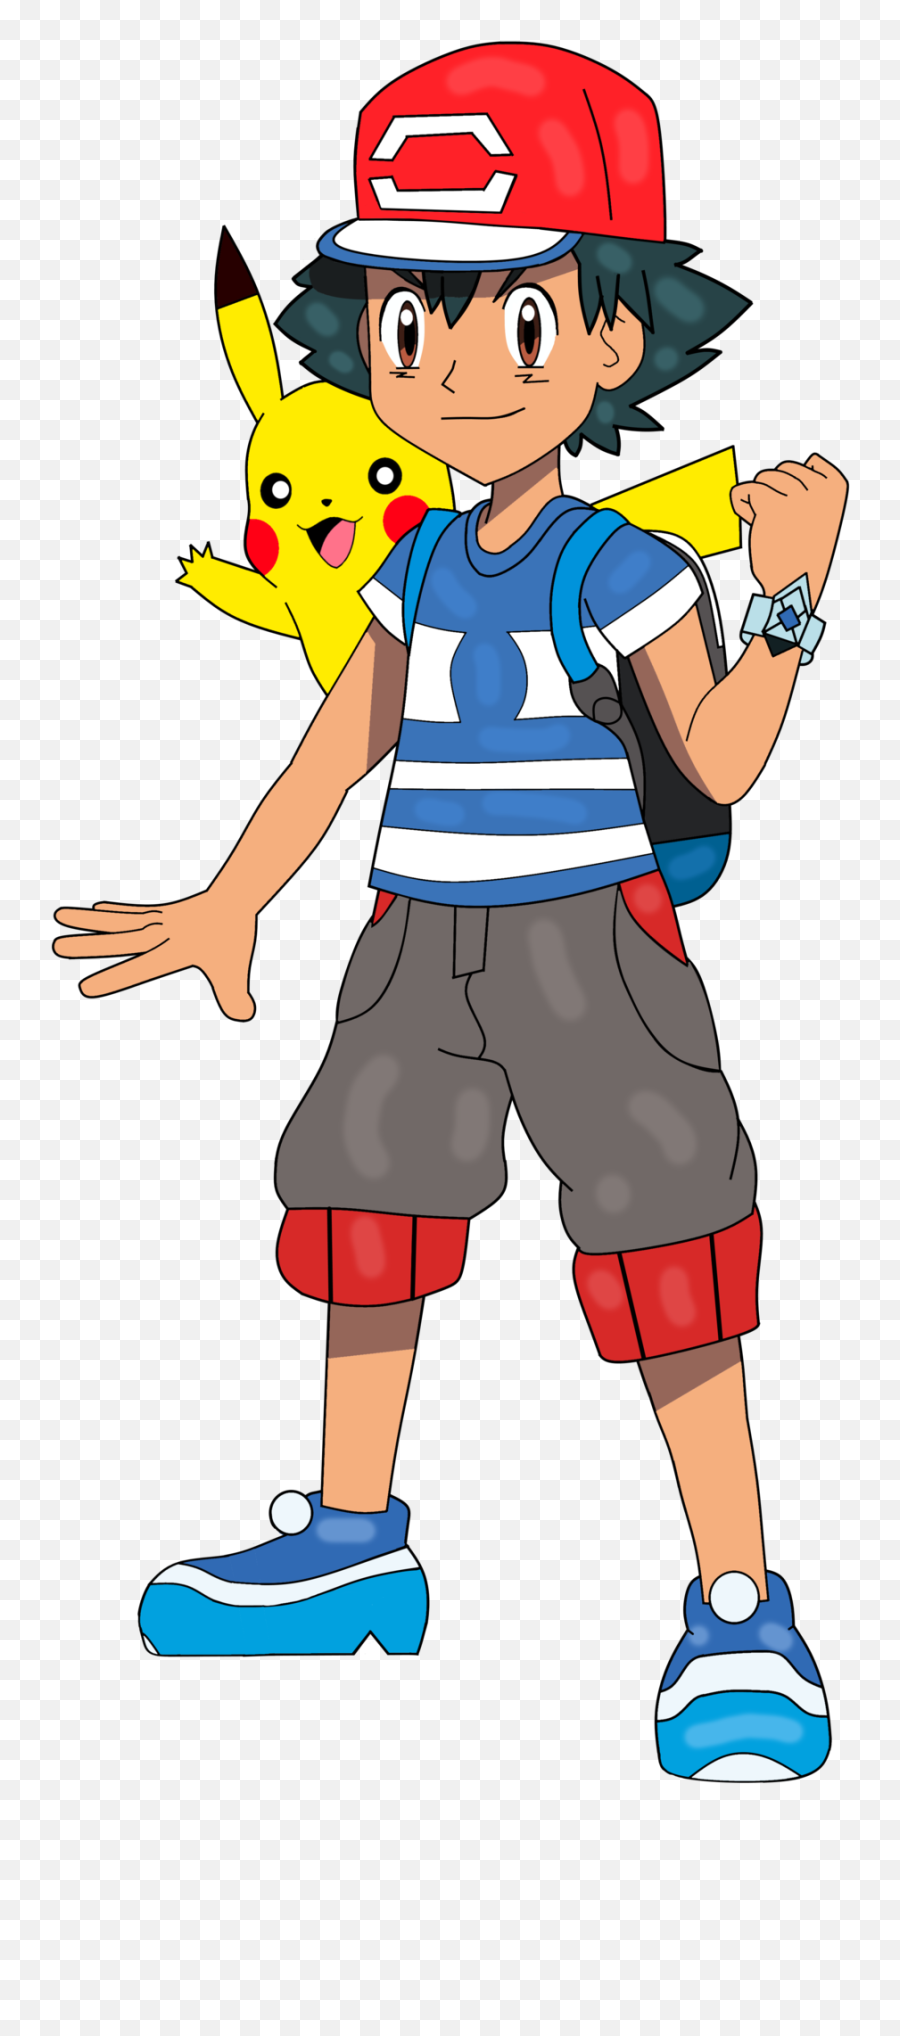 Ash Ketchum Png Image - Pokemon Sun And Moon Ultra Adventures Ash,Ash Ketchum Png